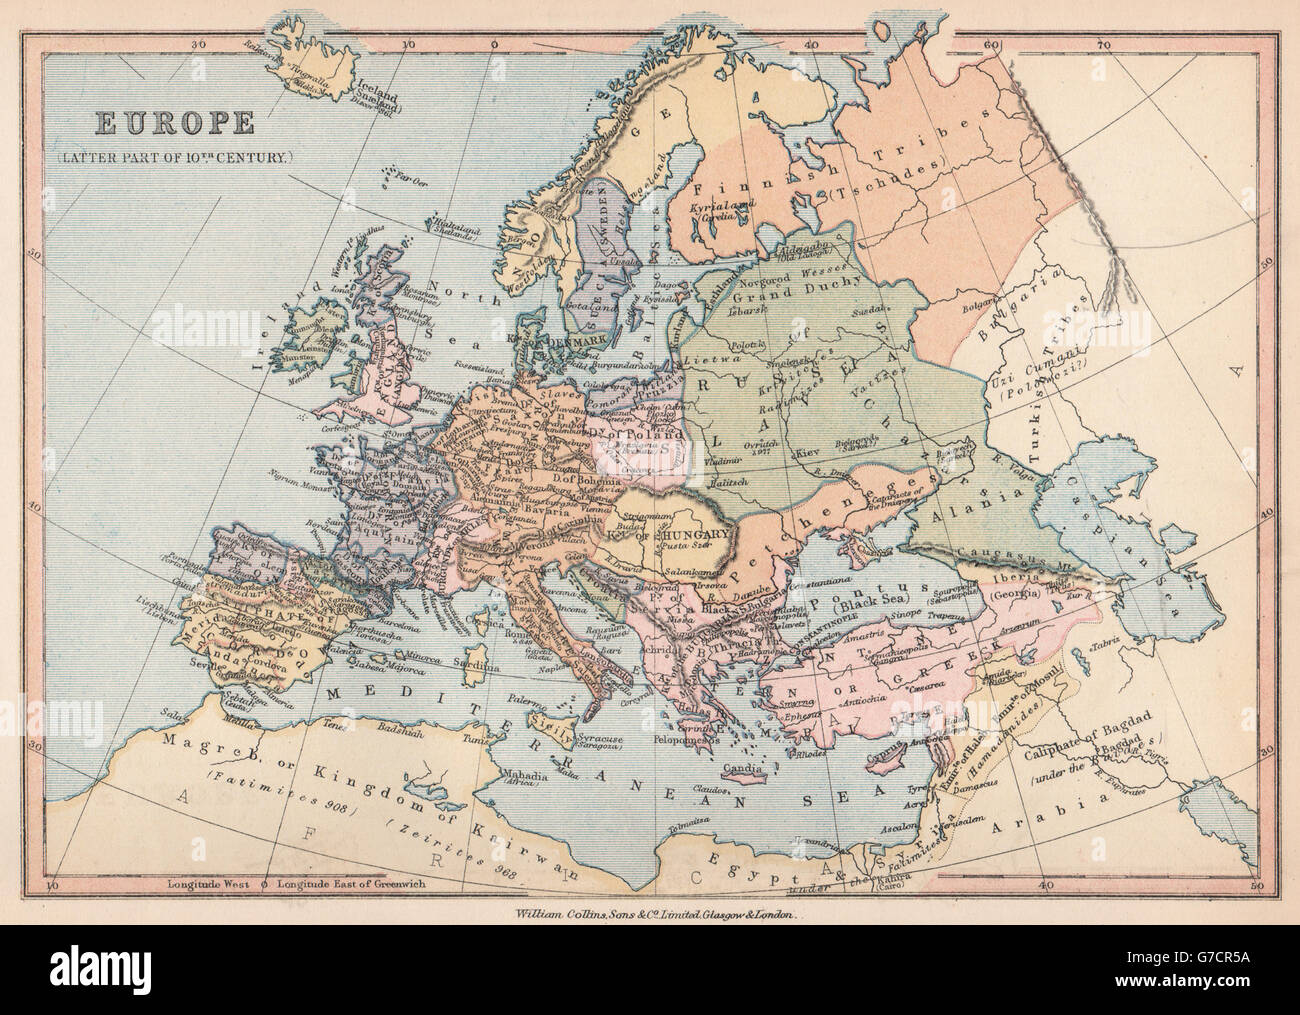 "Europa (letztere Teil des 10. Jahrhunderts)". Bartholomäus, 1878 Antike Landkarte Stockfoto